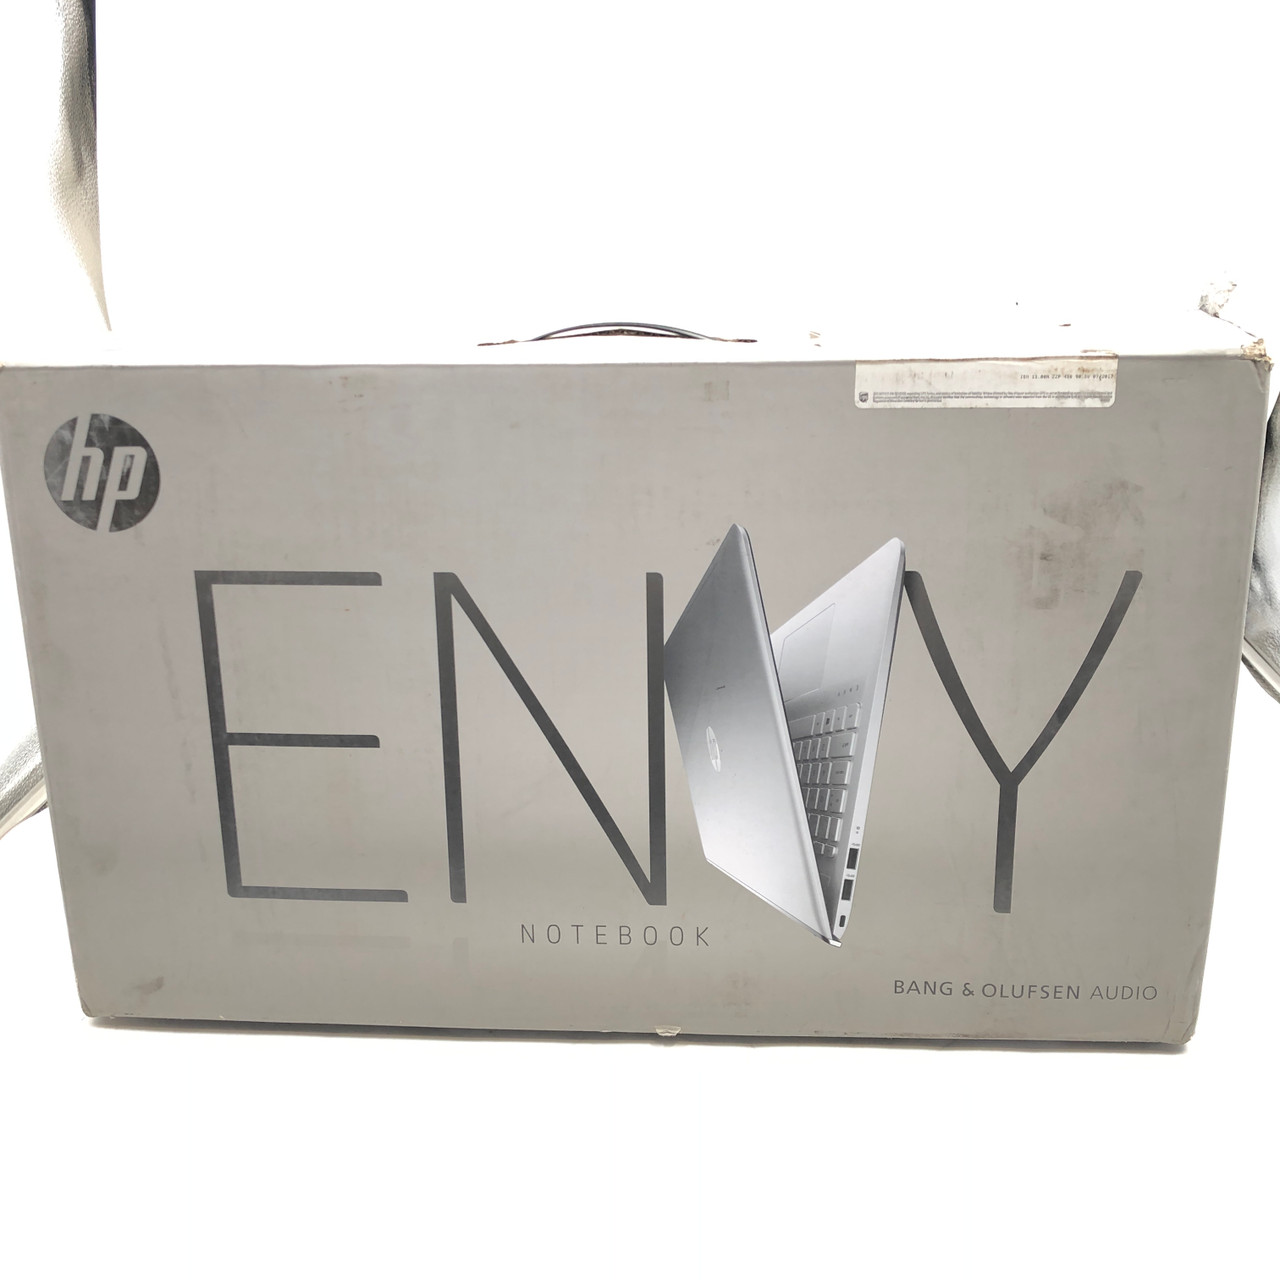 HP ENVY 15 TOUCH LAPTOP - INTEL CORE I7 6TH GEN, 12GB RAM, 256GB SSD